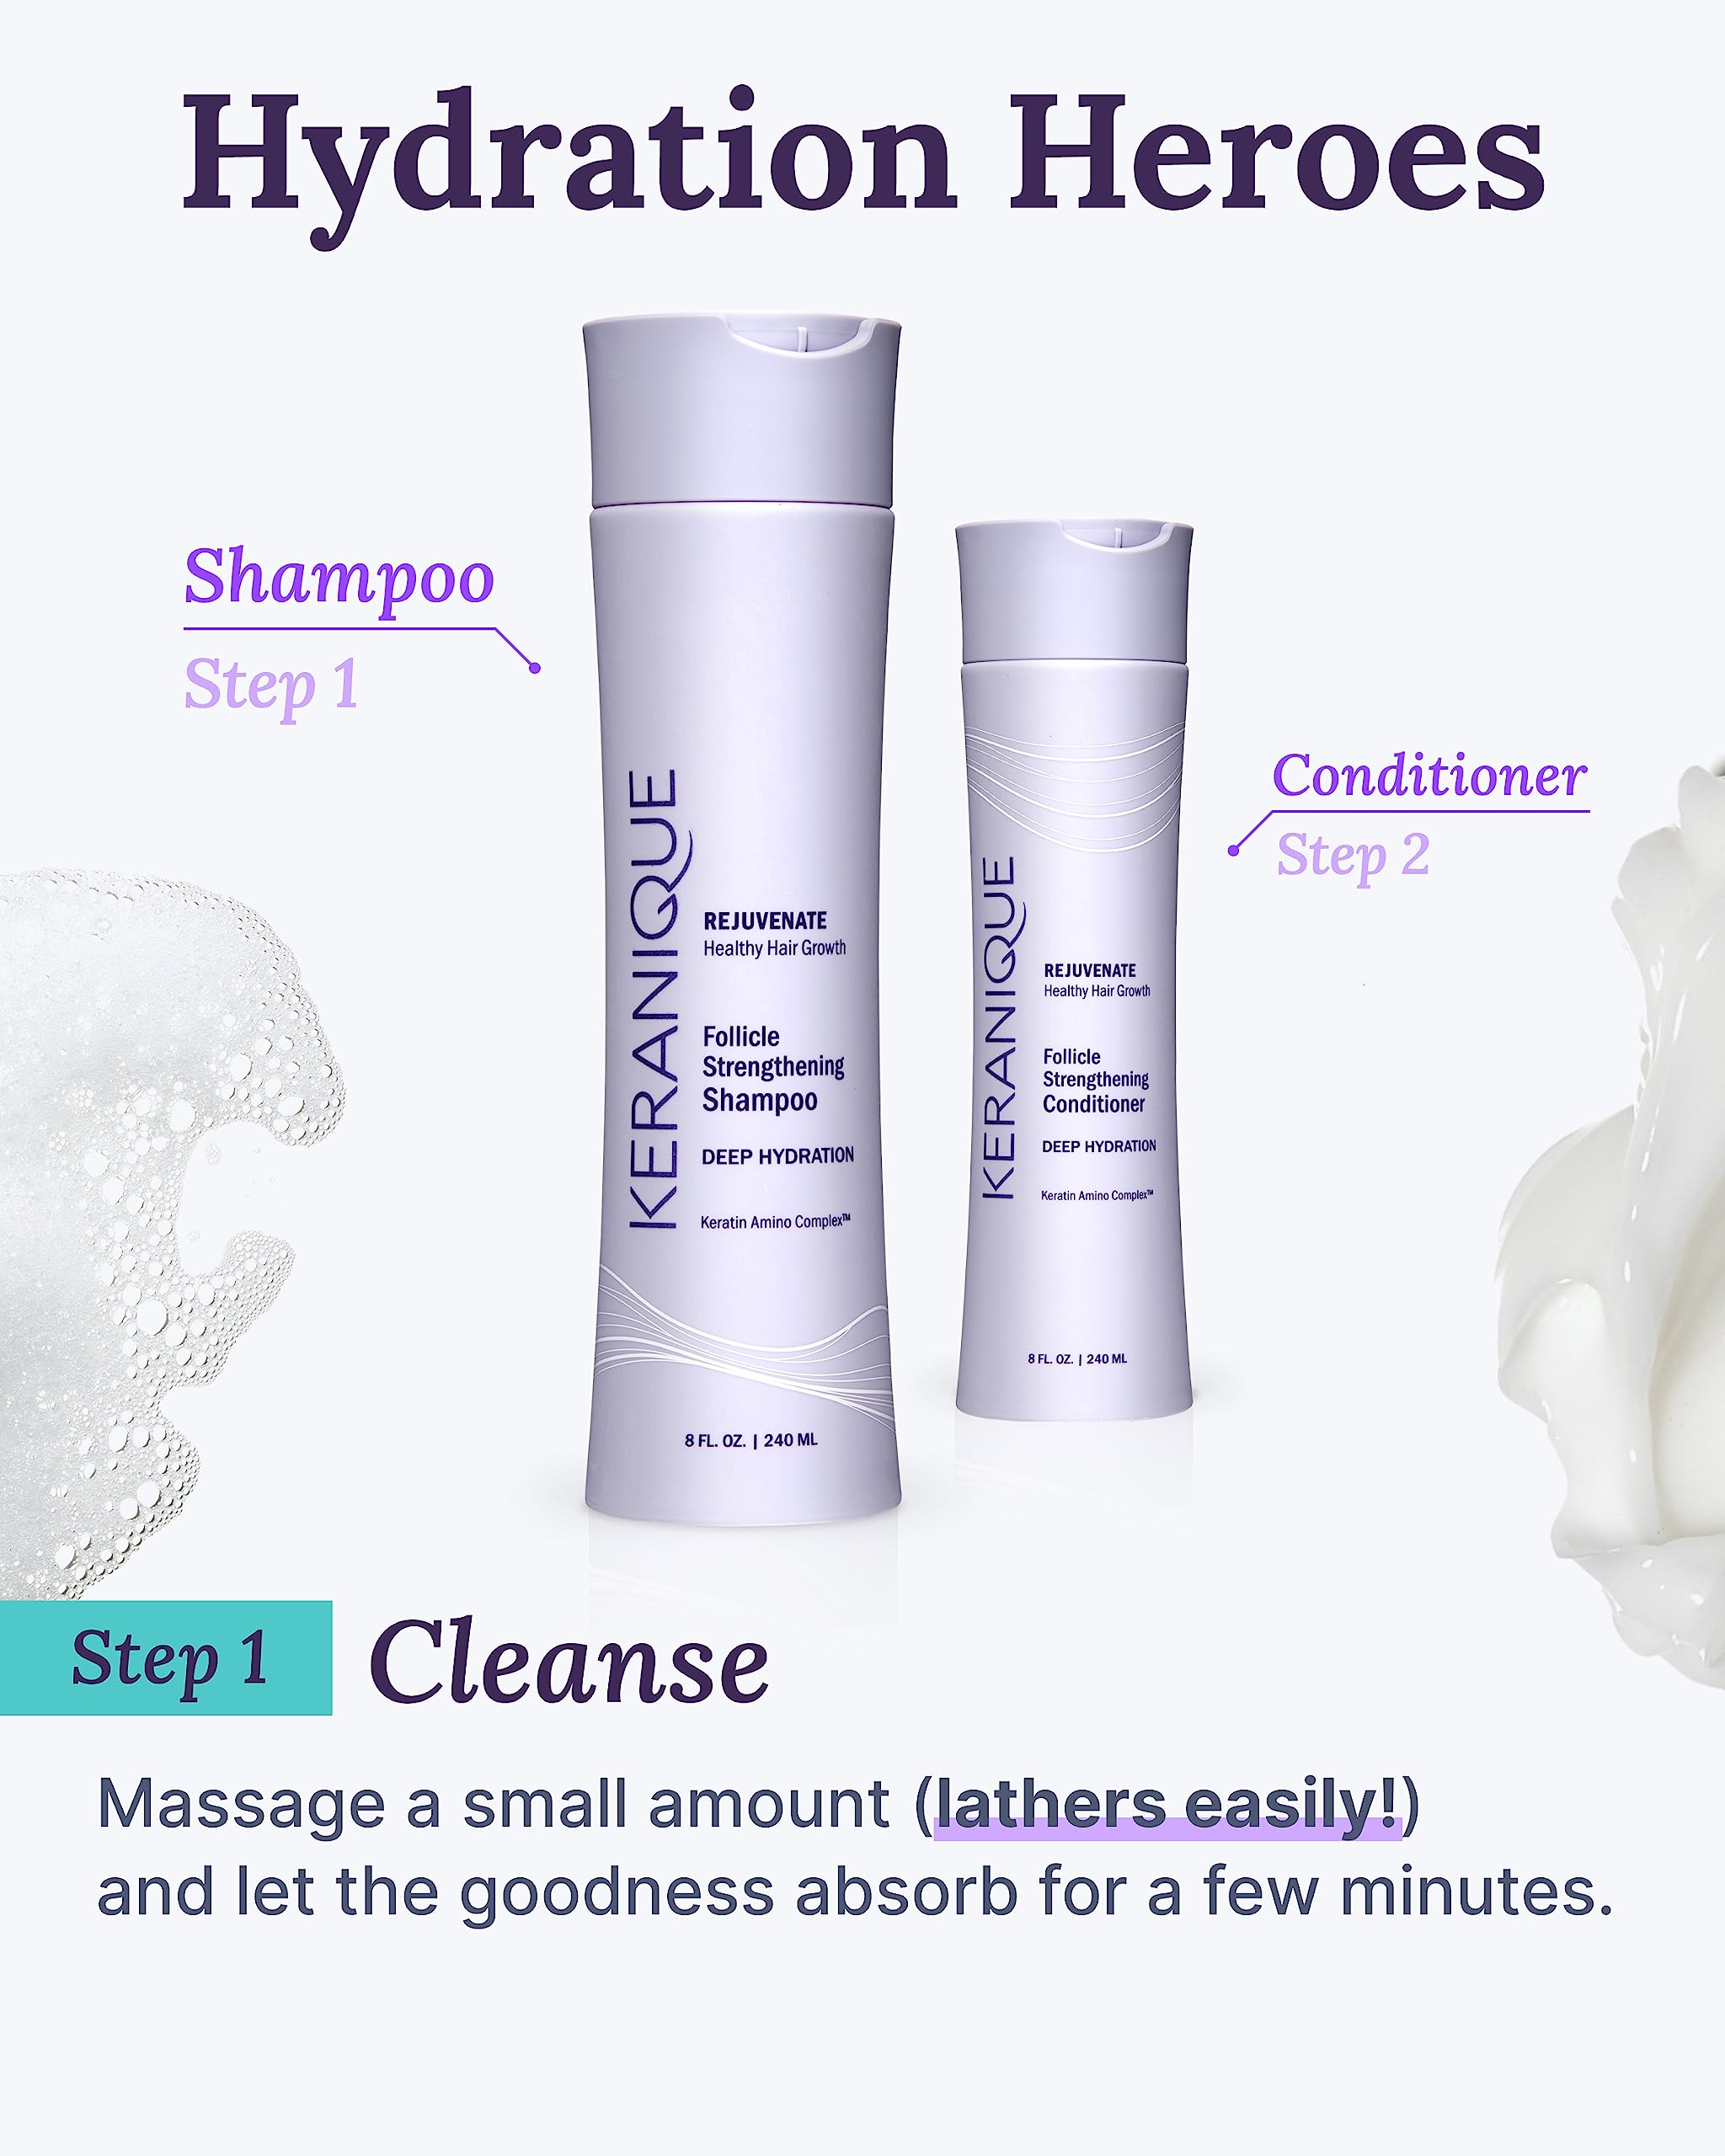 Keranique Deep Hydration Scalp Stimulating Shampoo for Thinning Hair, 8 Fl Oz